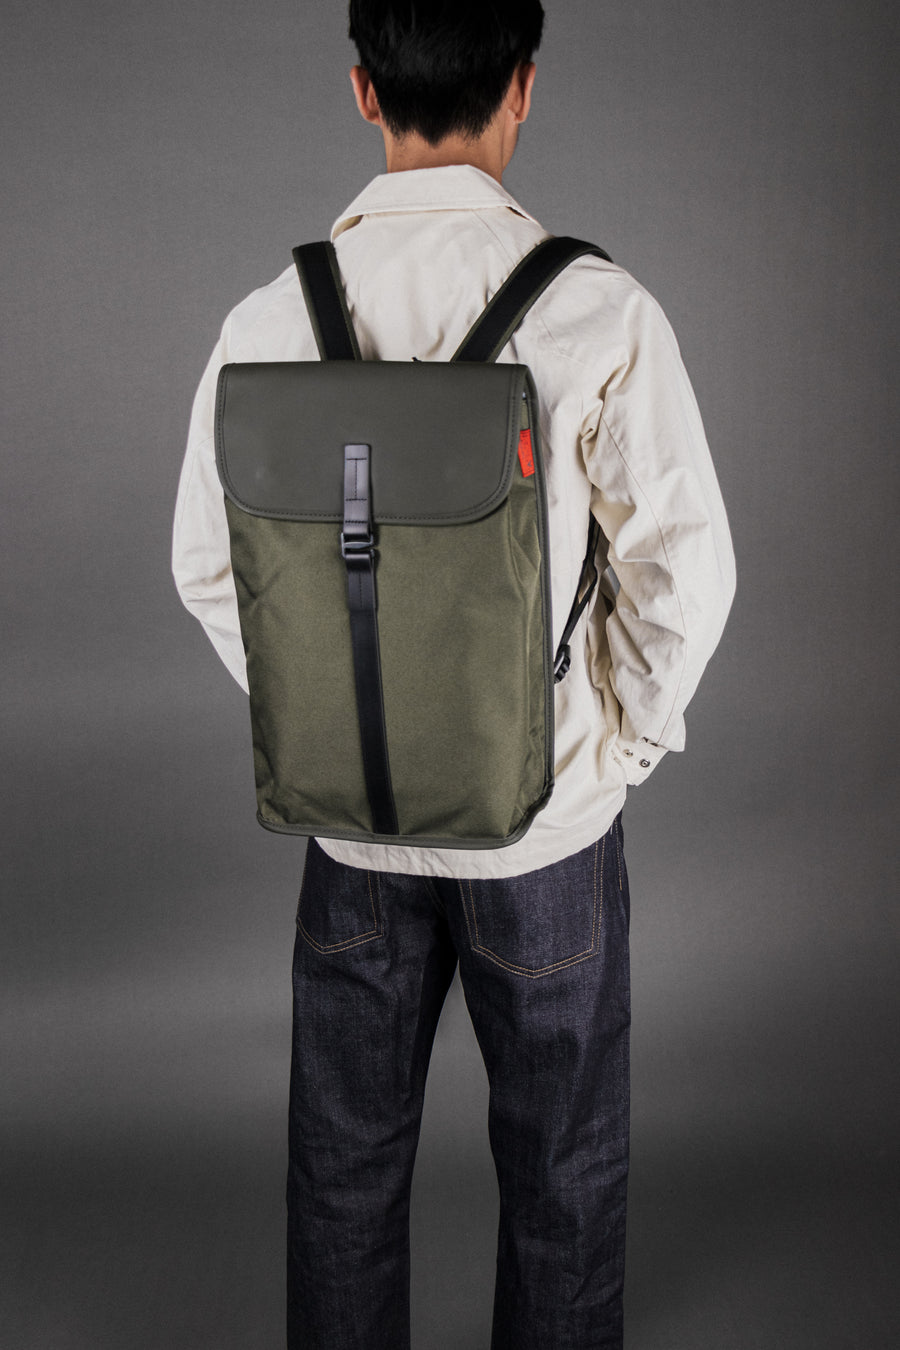 Satchel Backpack